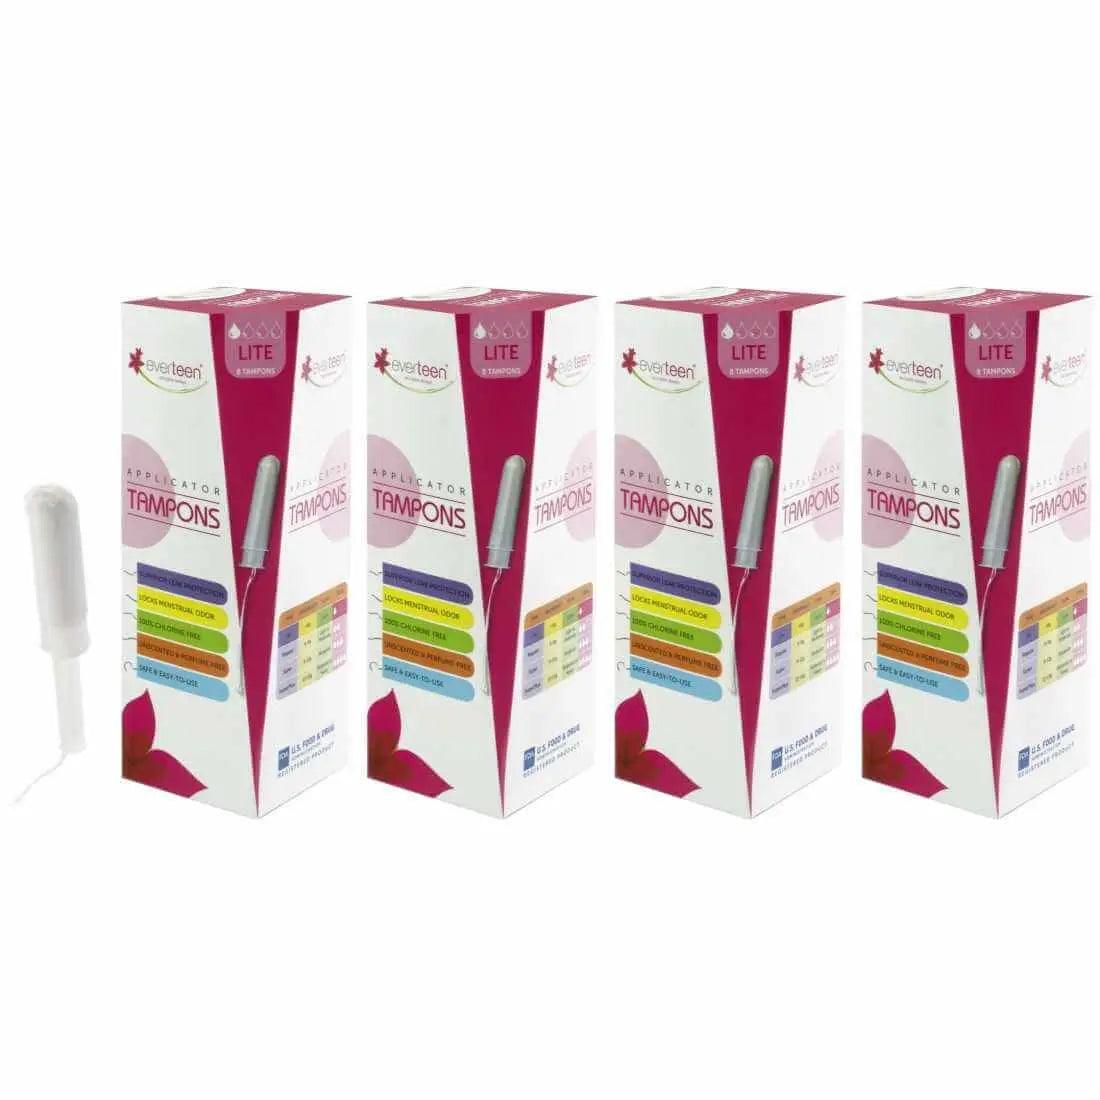 everteen Applicator Tampons for Menstrual Periods in Women 8903540009774